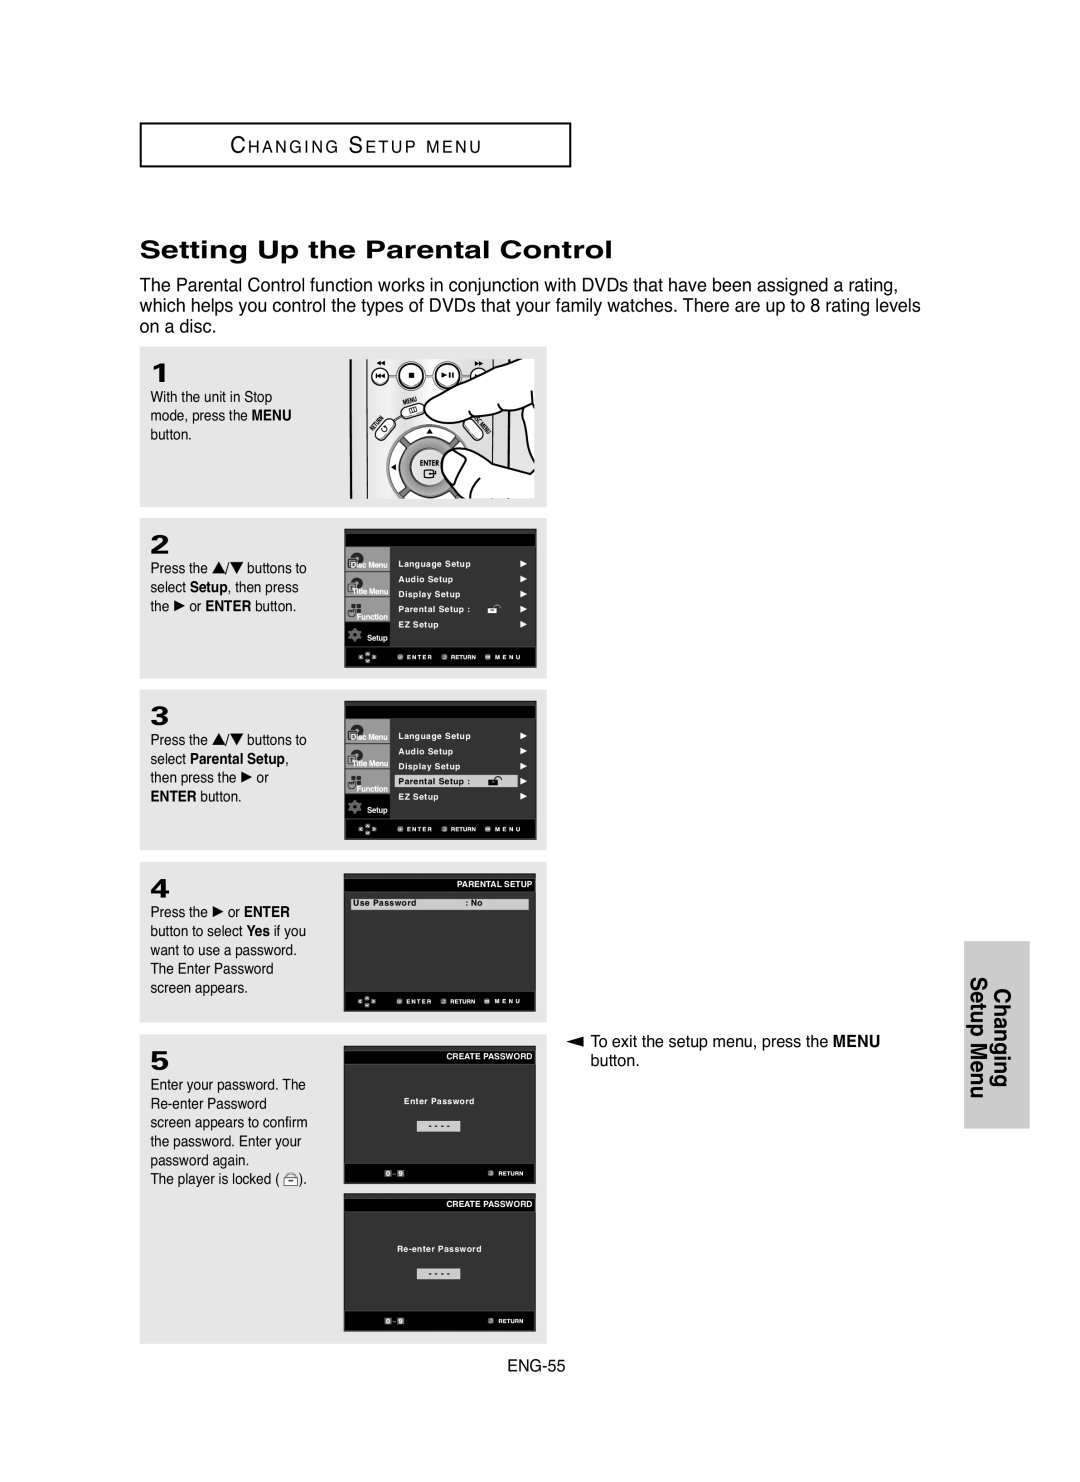 Samsung DVD-HD755 manual Setting Up the Parental Control, Changing Setup Menu, C H A N G I N G Se T U P M E N U, ENG-55 